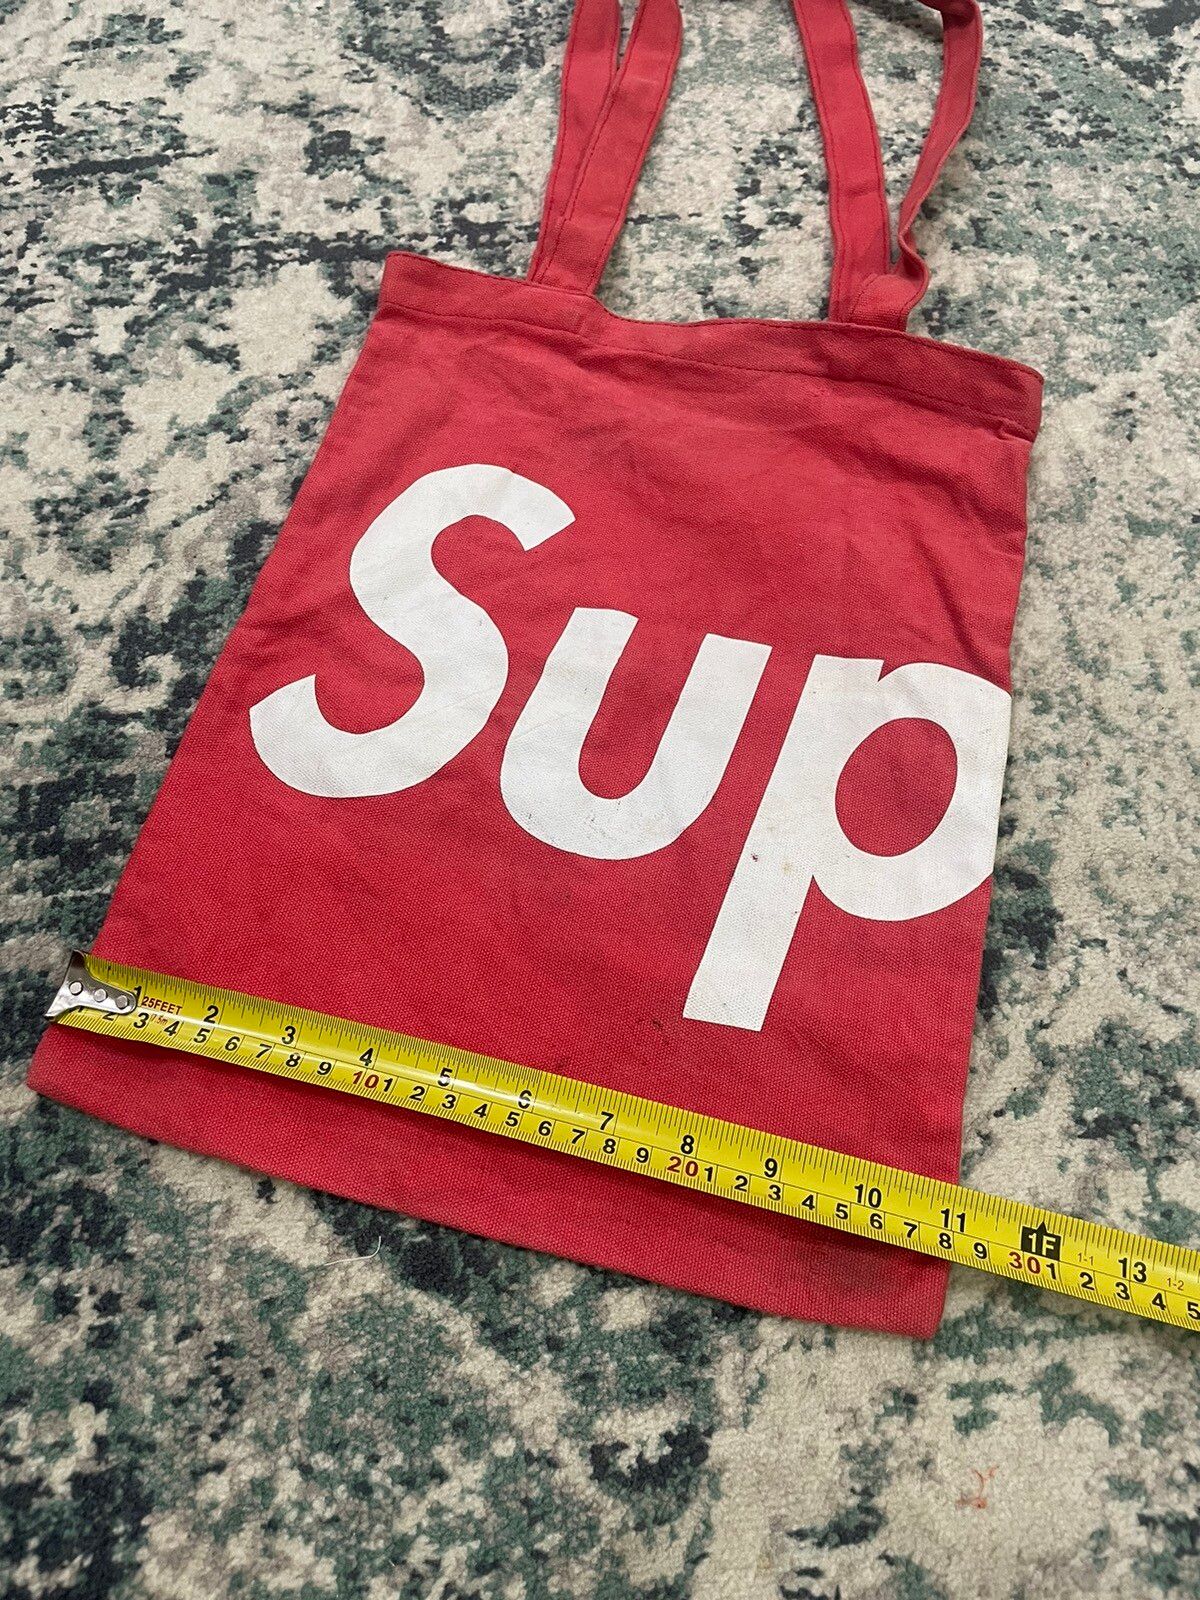 Supreme 2009 Shoulder Tote Bag Red Box Logo - 10